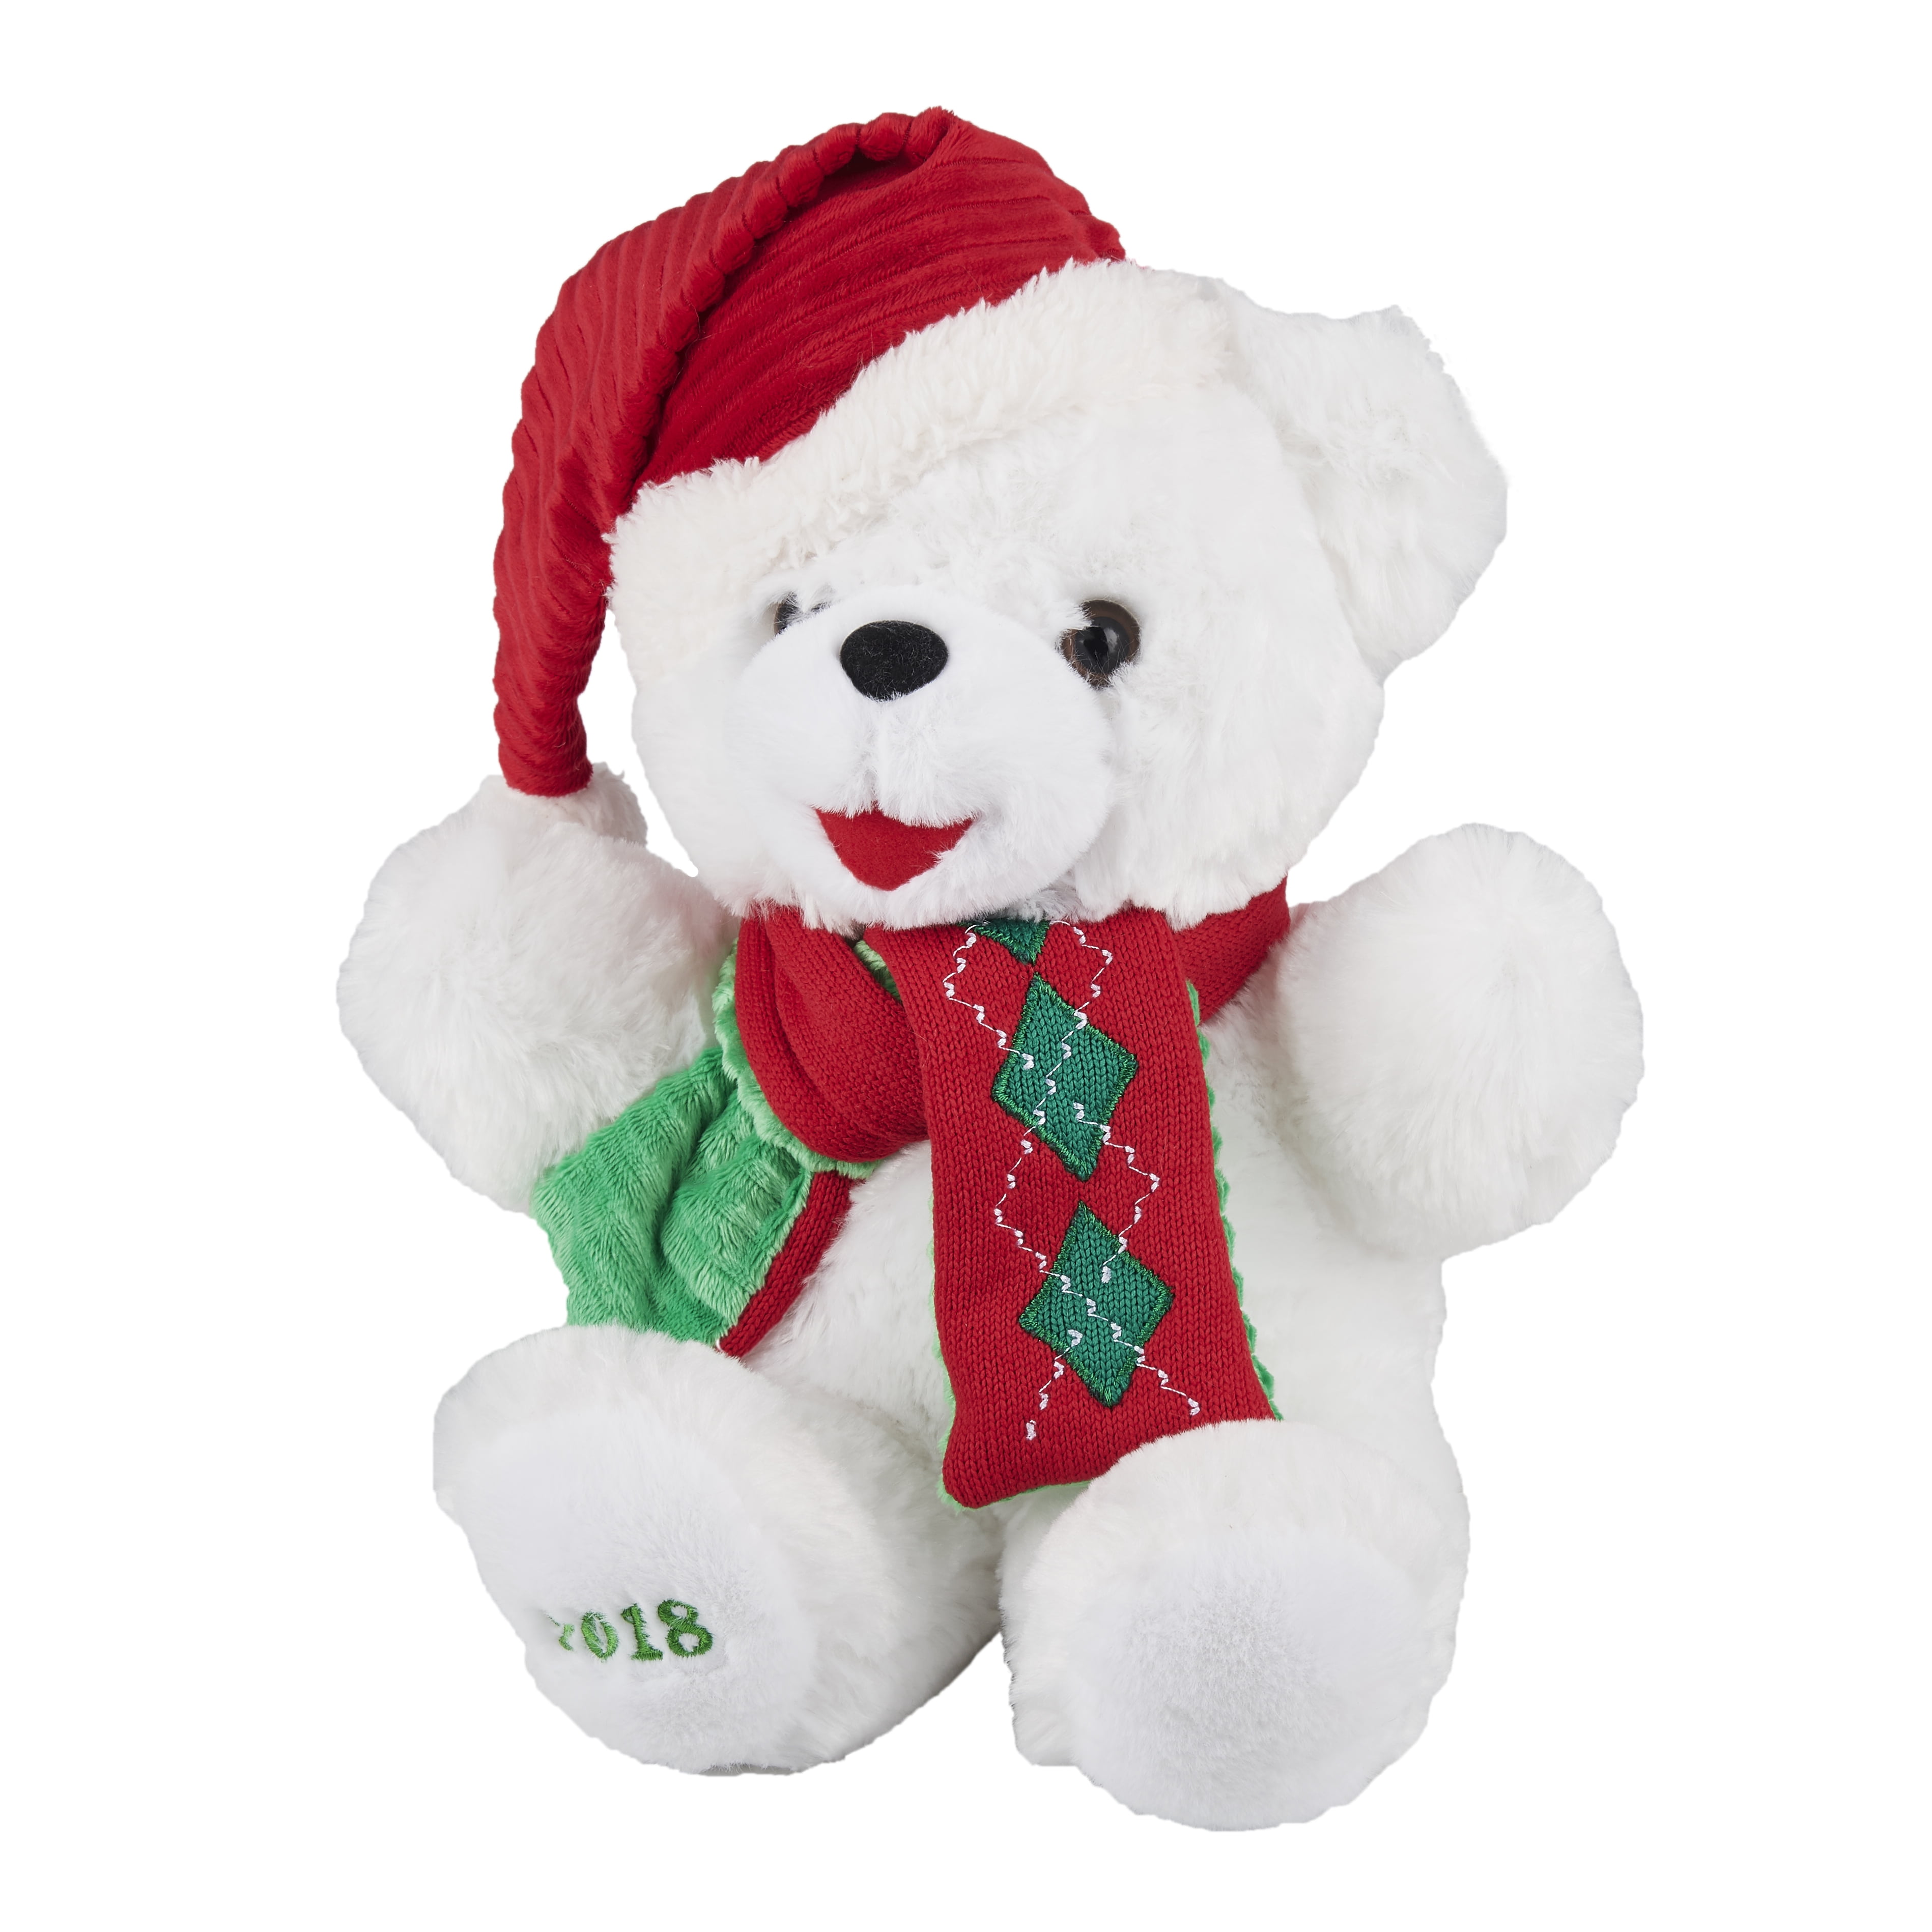 Holiday Time Plush Teddy Bear 2018, 12 